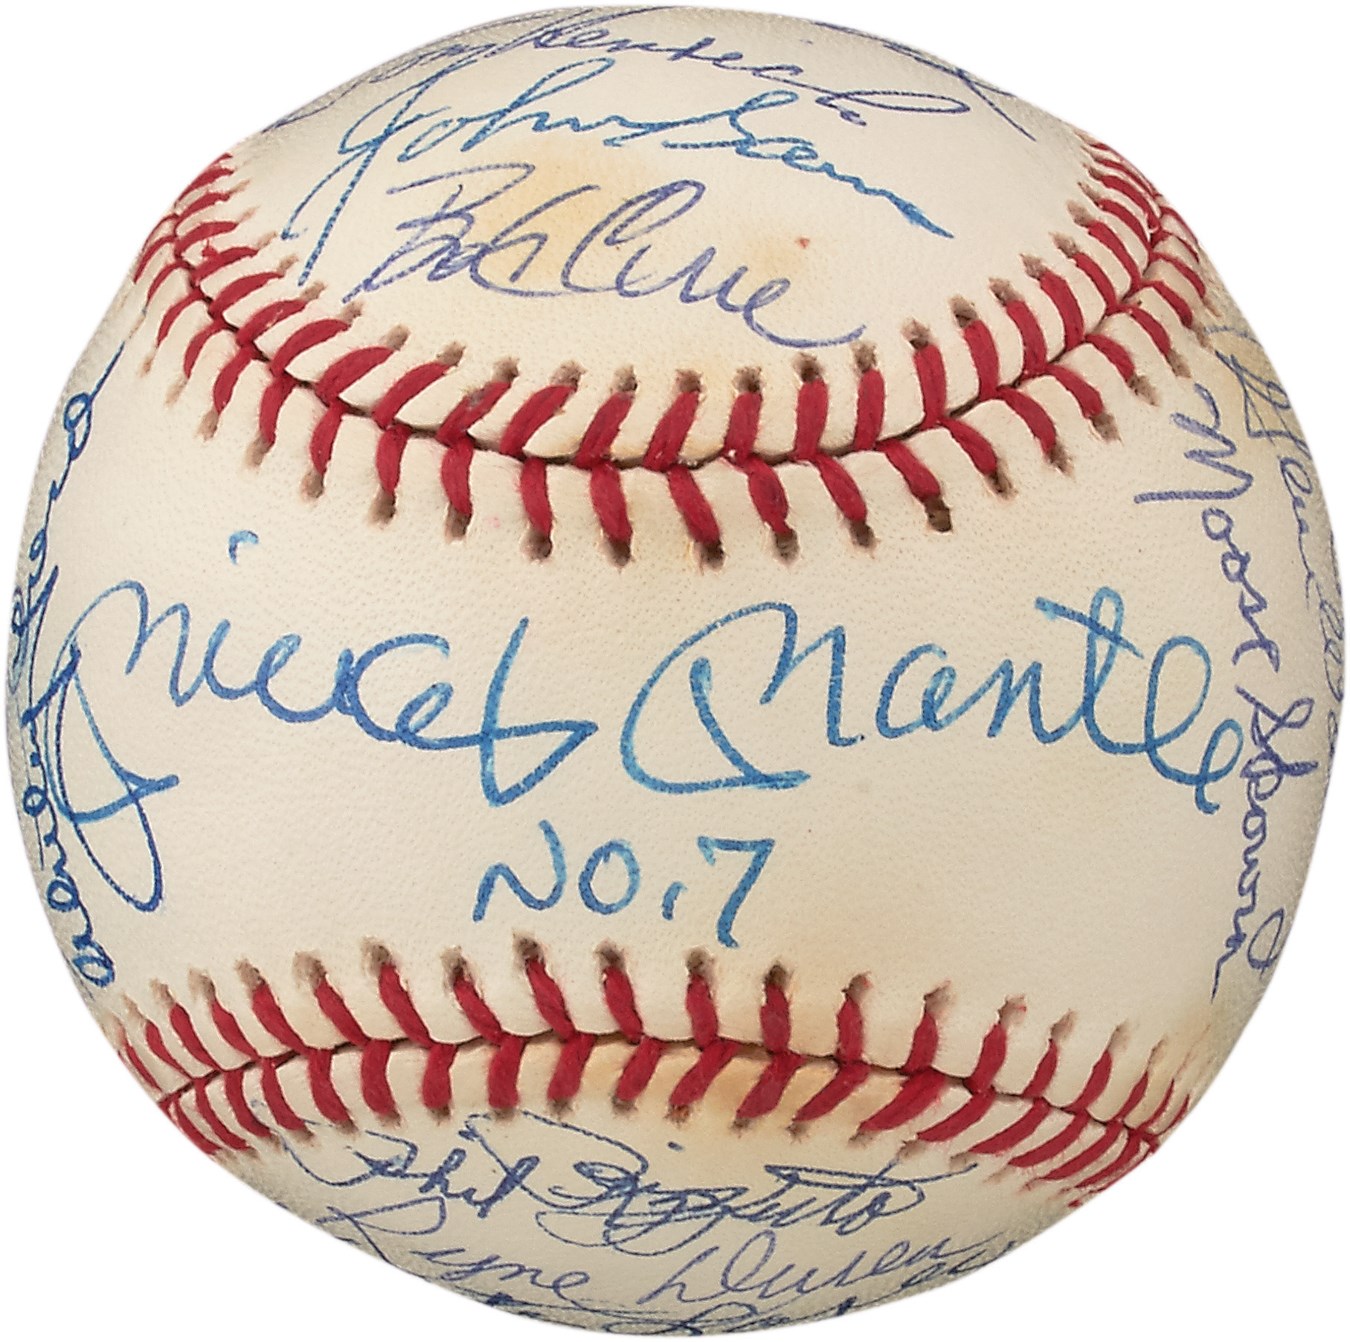 1950s New York Yankee World Series Champions Signed Baseball - Mickey Mantle No. 7 on Sweet Spot